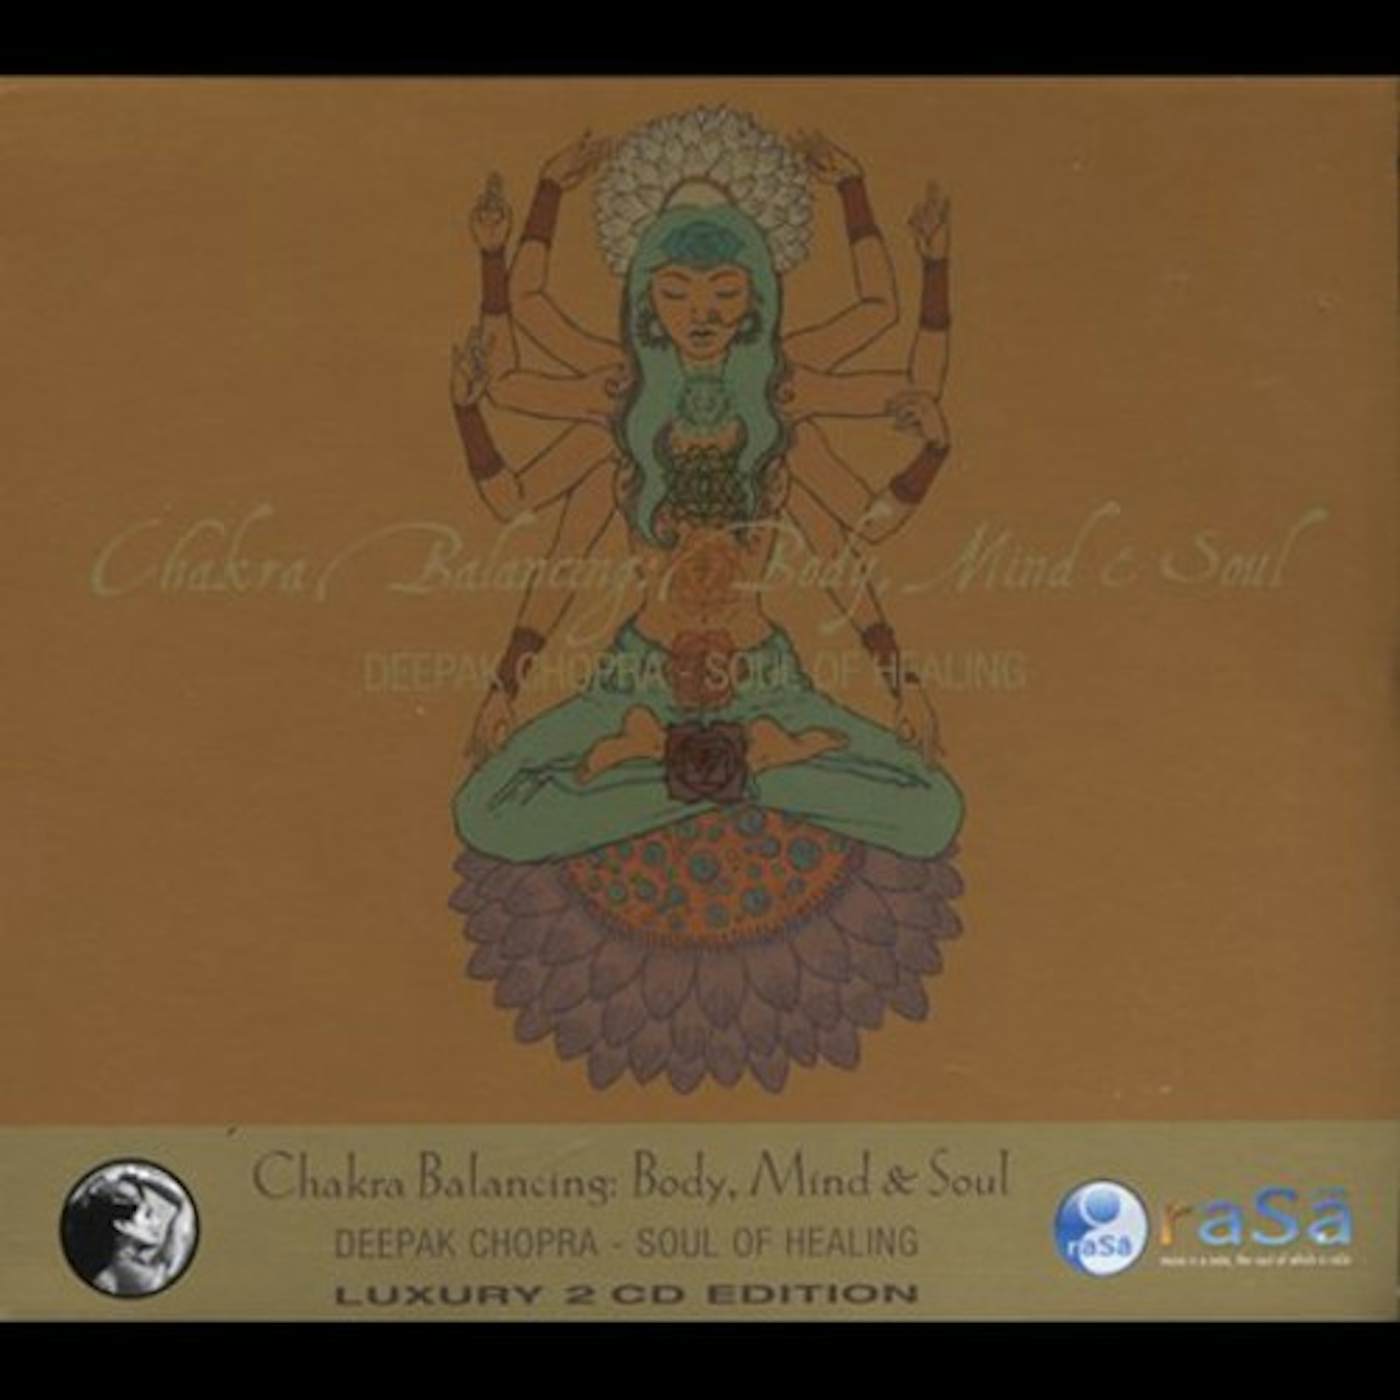 Deepak Chopra CHAKRA BALANCING: BODY MIND & SOUL CD